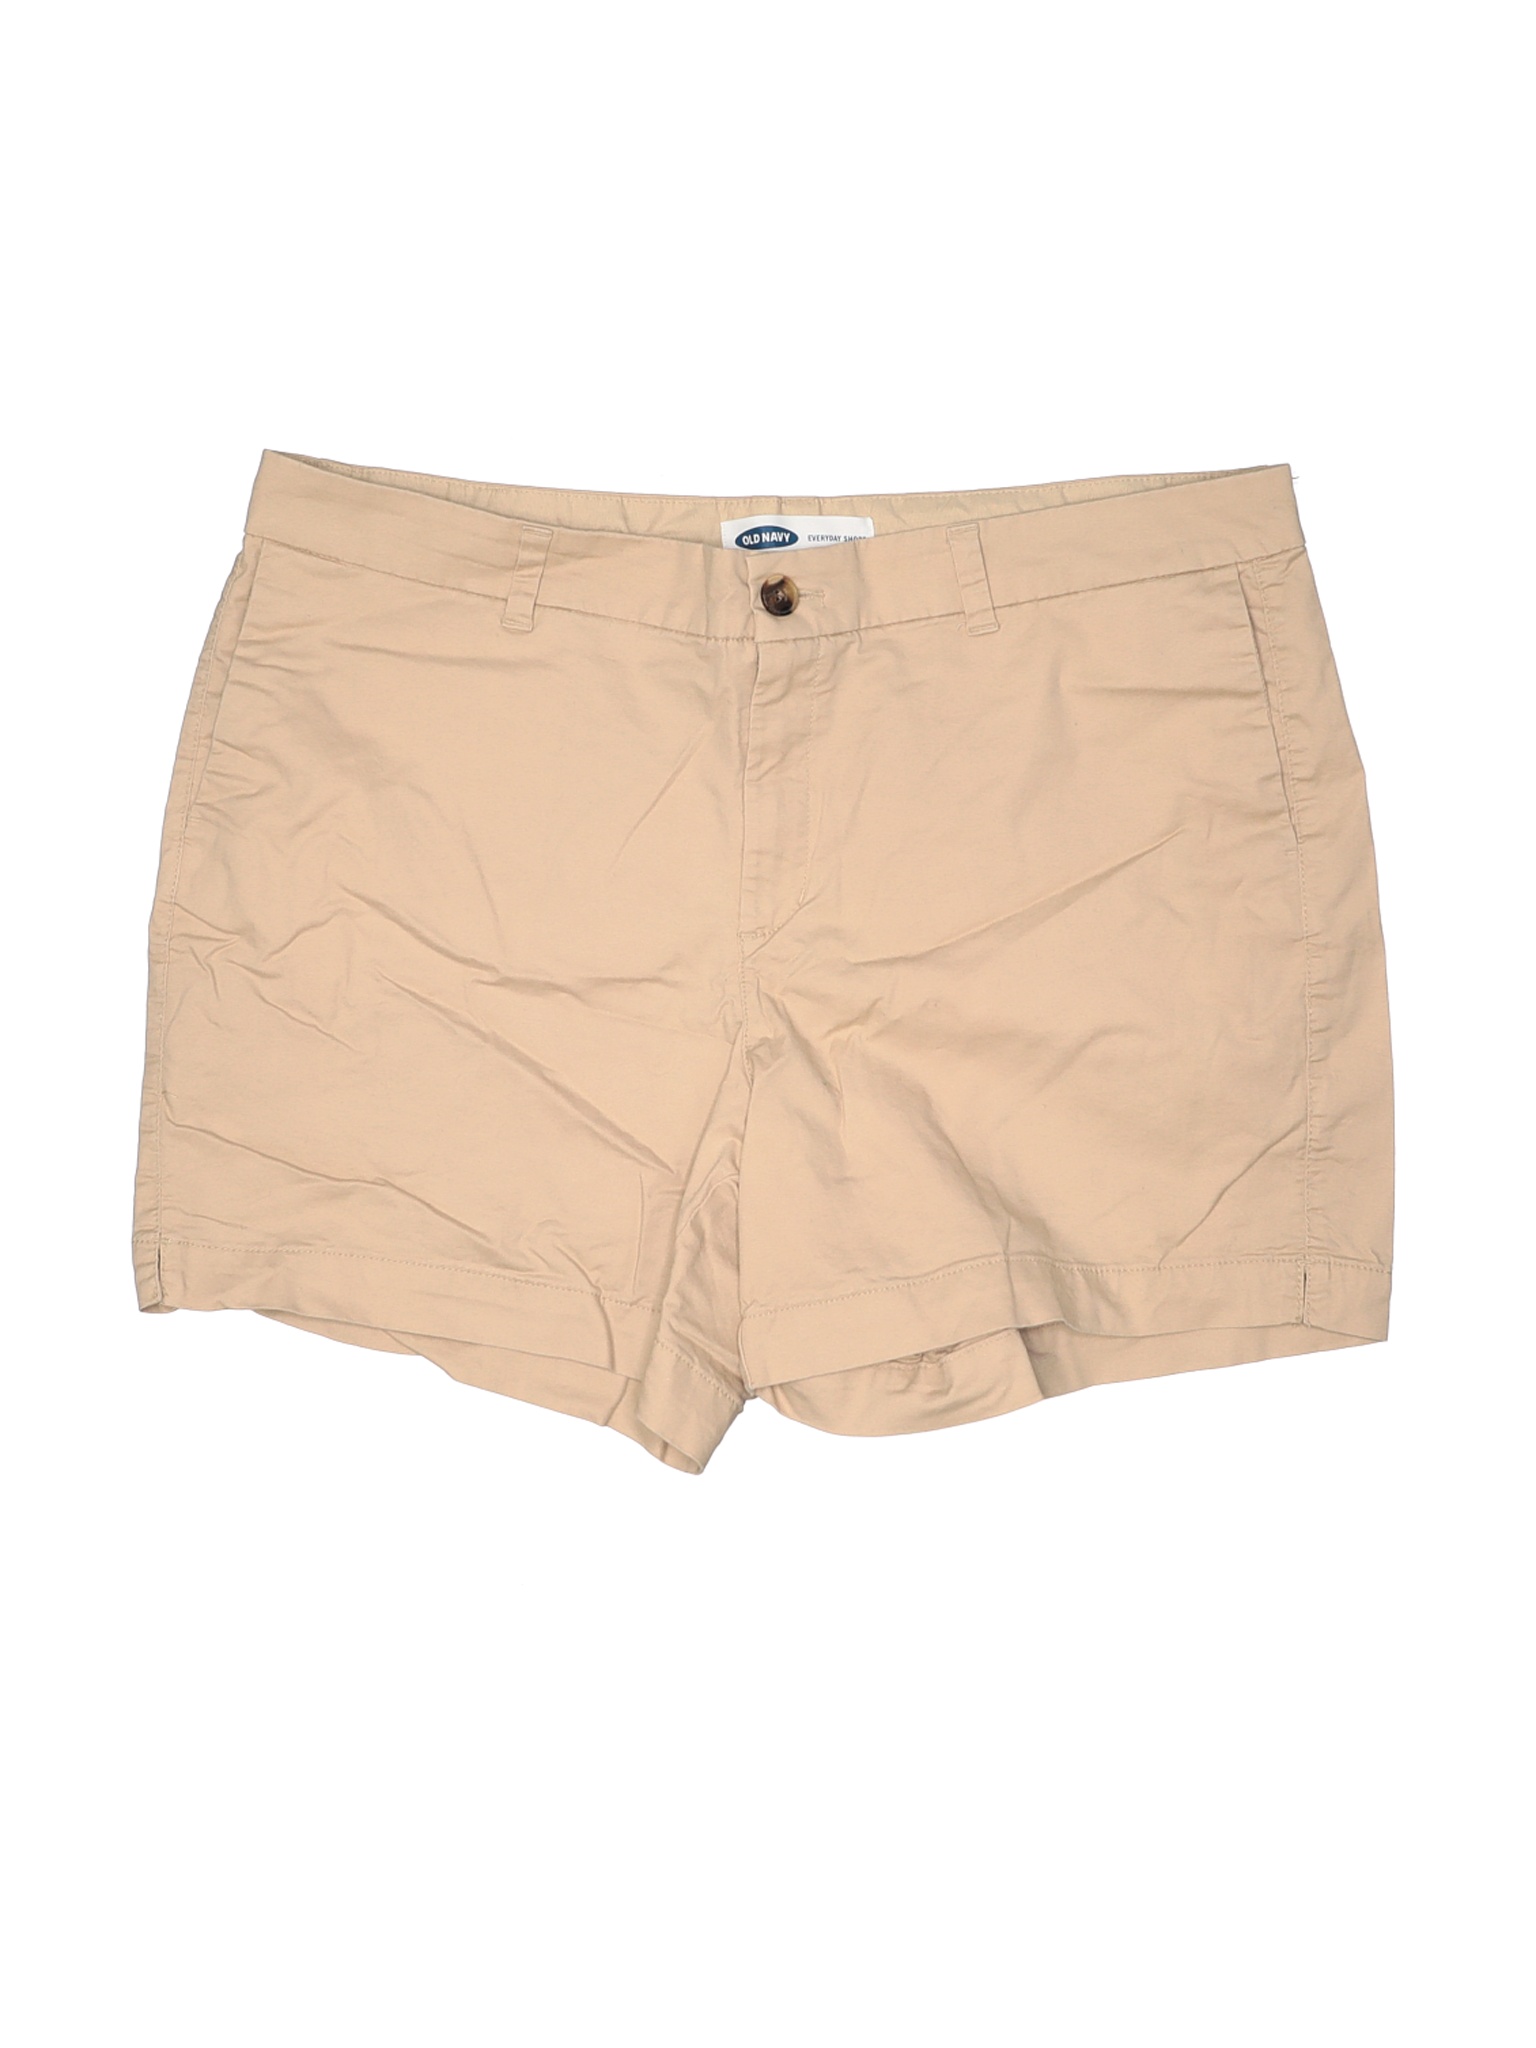 Old Navy Women Brown Khaki Shorts 16 | eBay